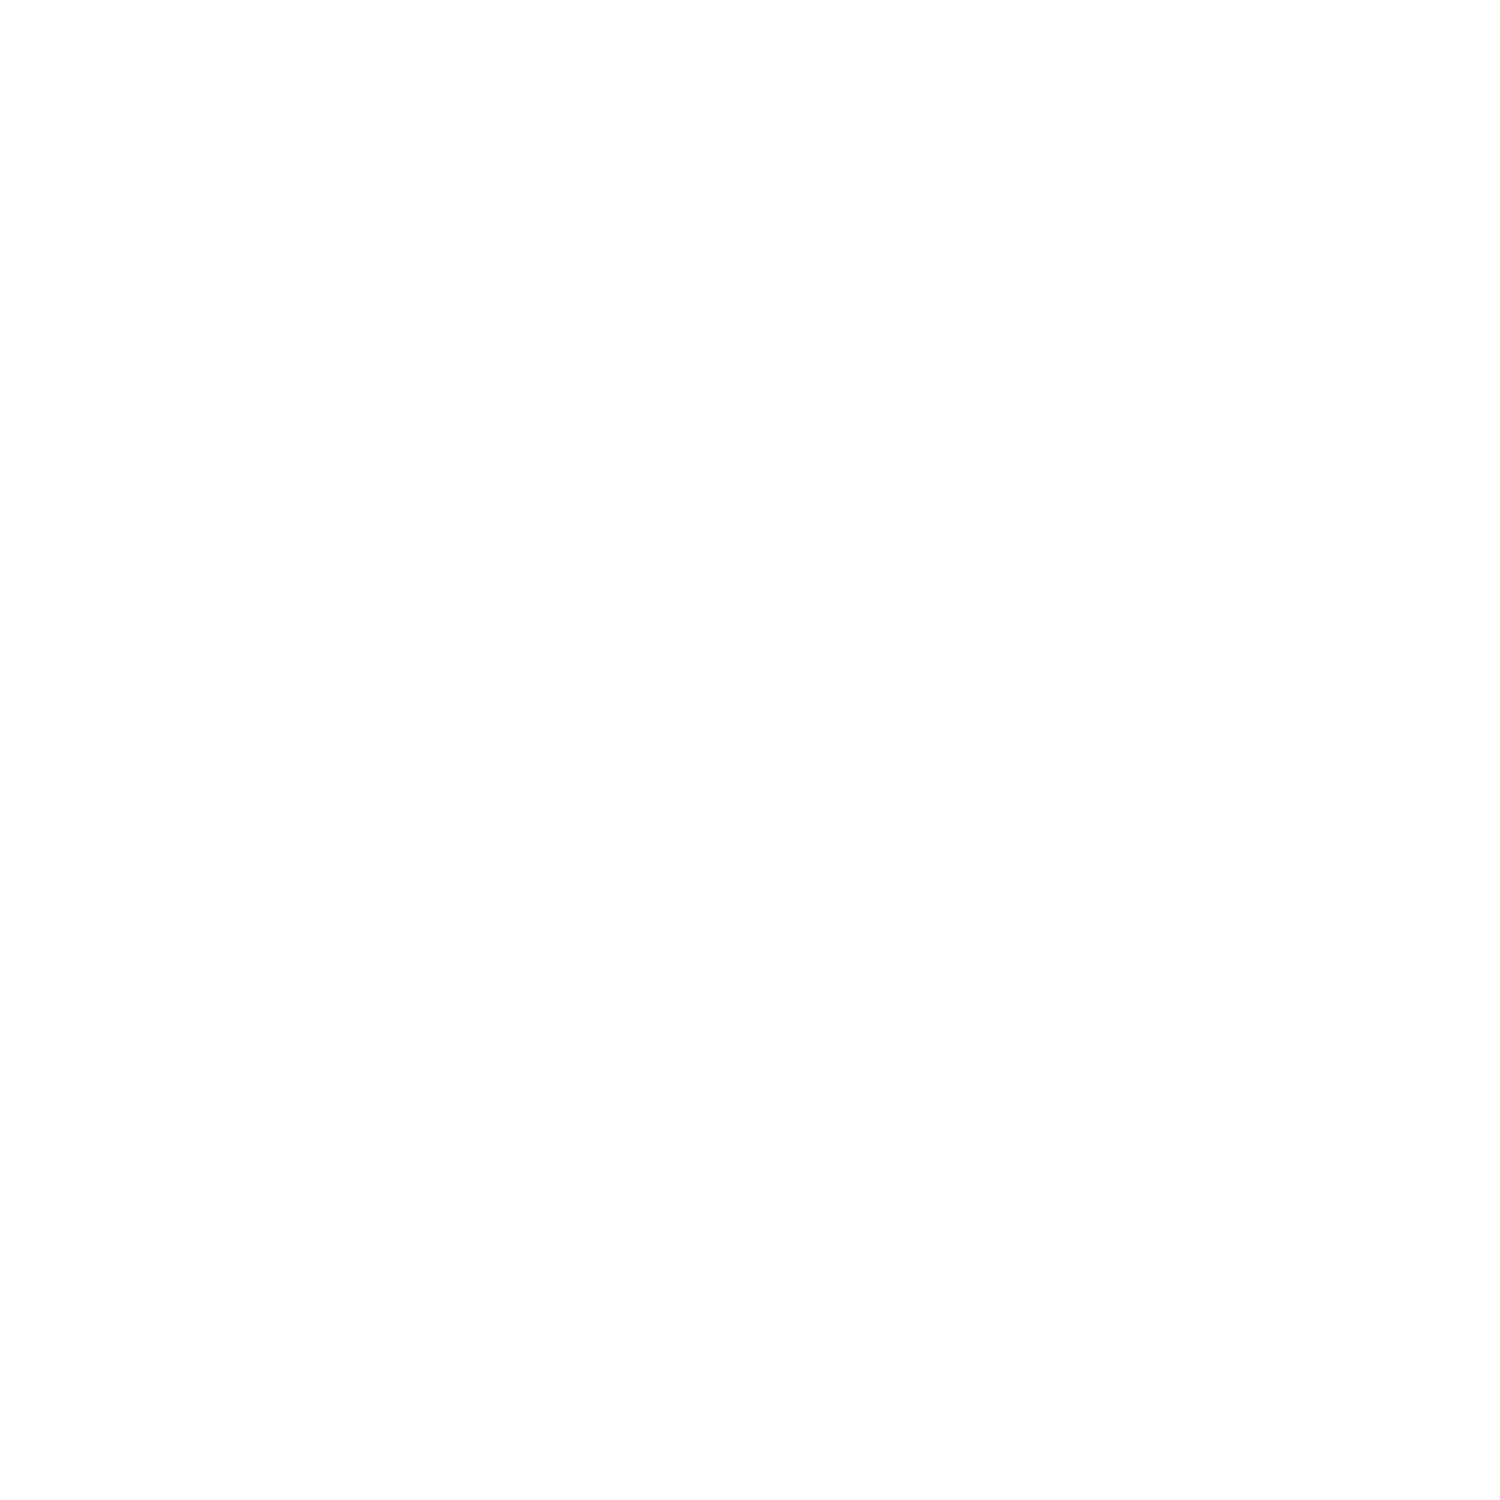 https://images.squarespace-cdn.com/content/v1/5cfe0019cdc28e0001b3bcfa/20b37738-ce54-42ef-9dcd-32b9c619fbbb/gym+love+logos_Circle+Logo+White.png